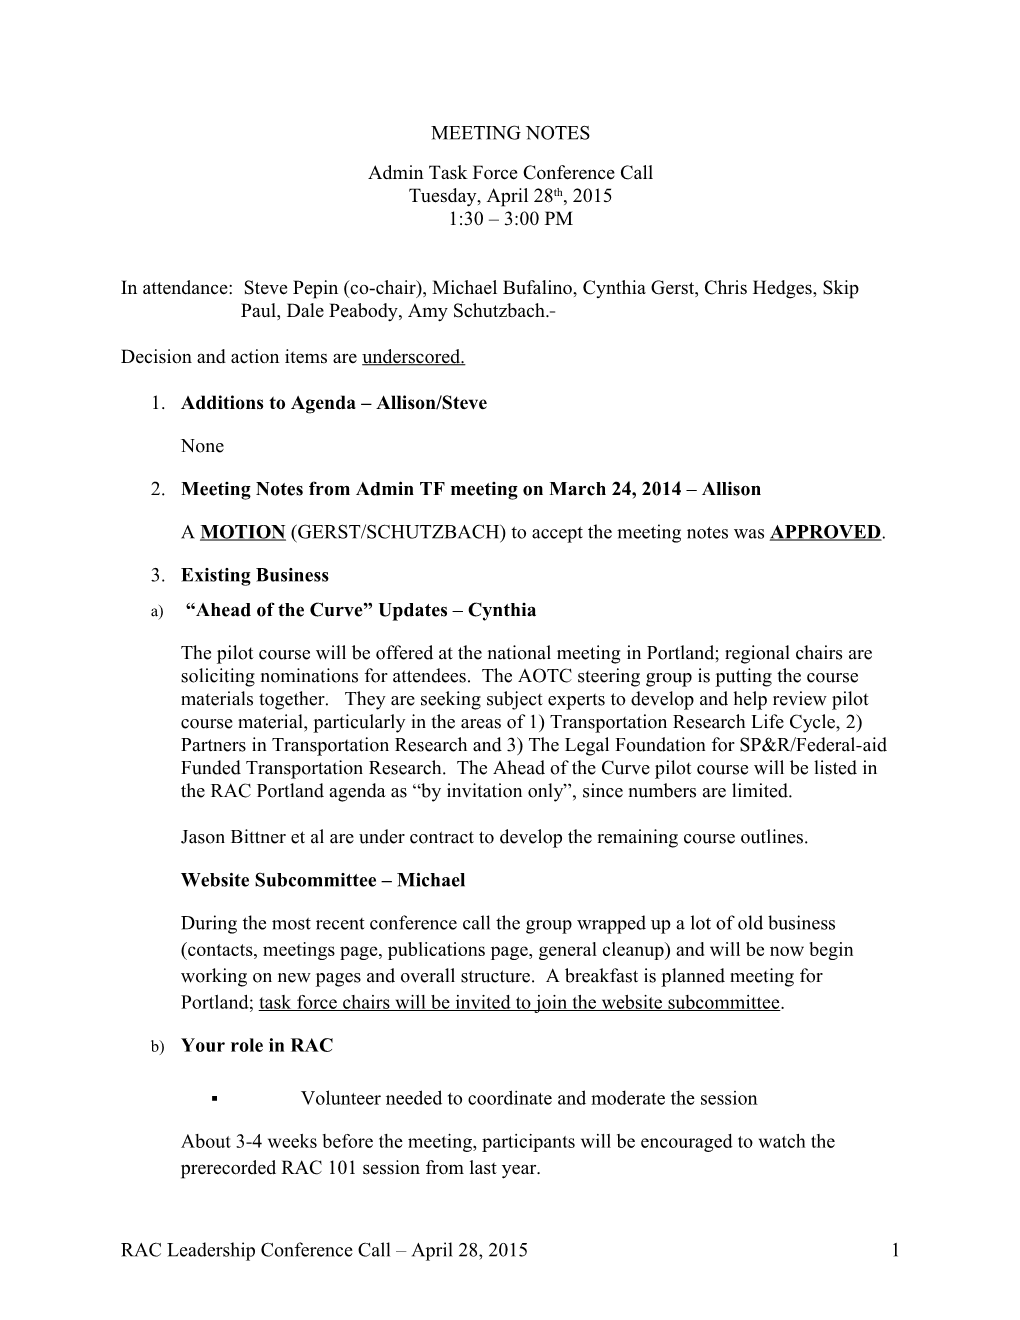 Admin TF Meeting Notes: April 28, 2015